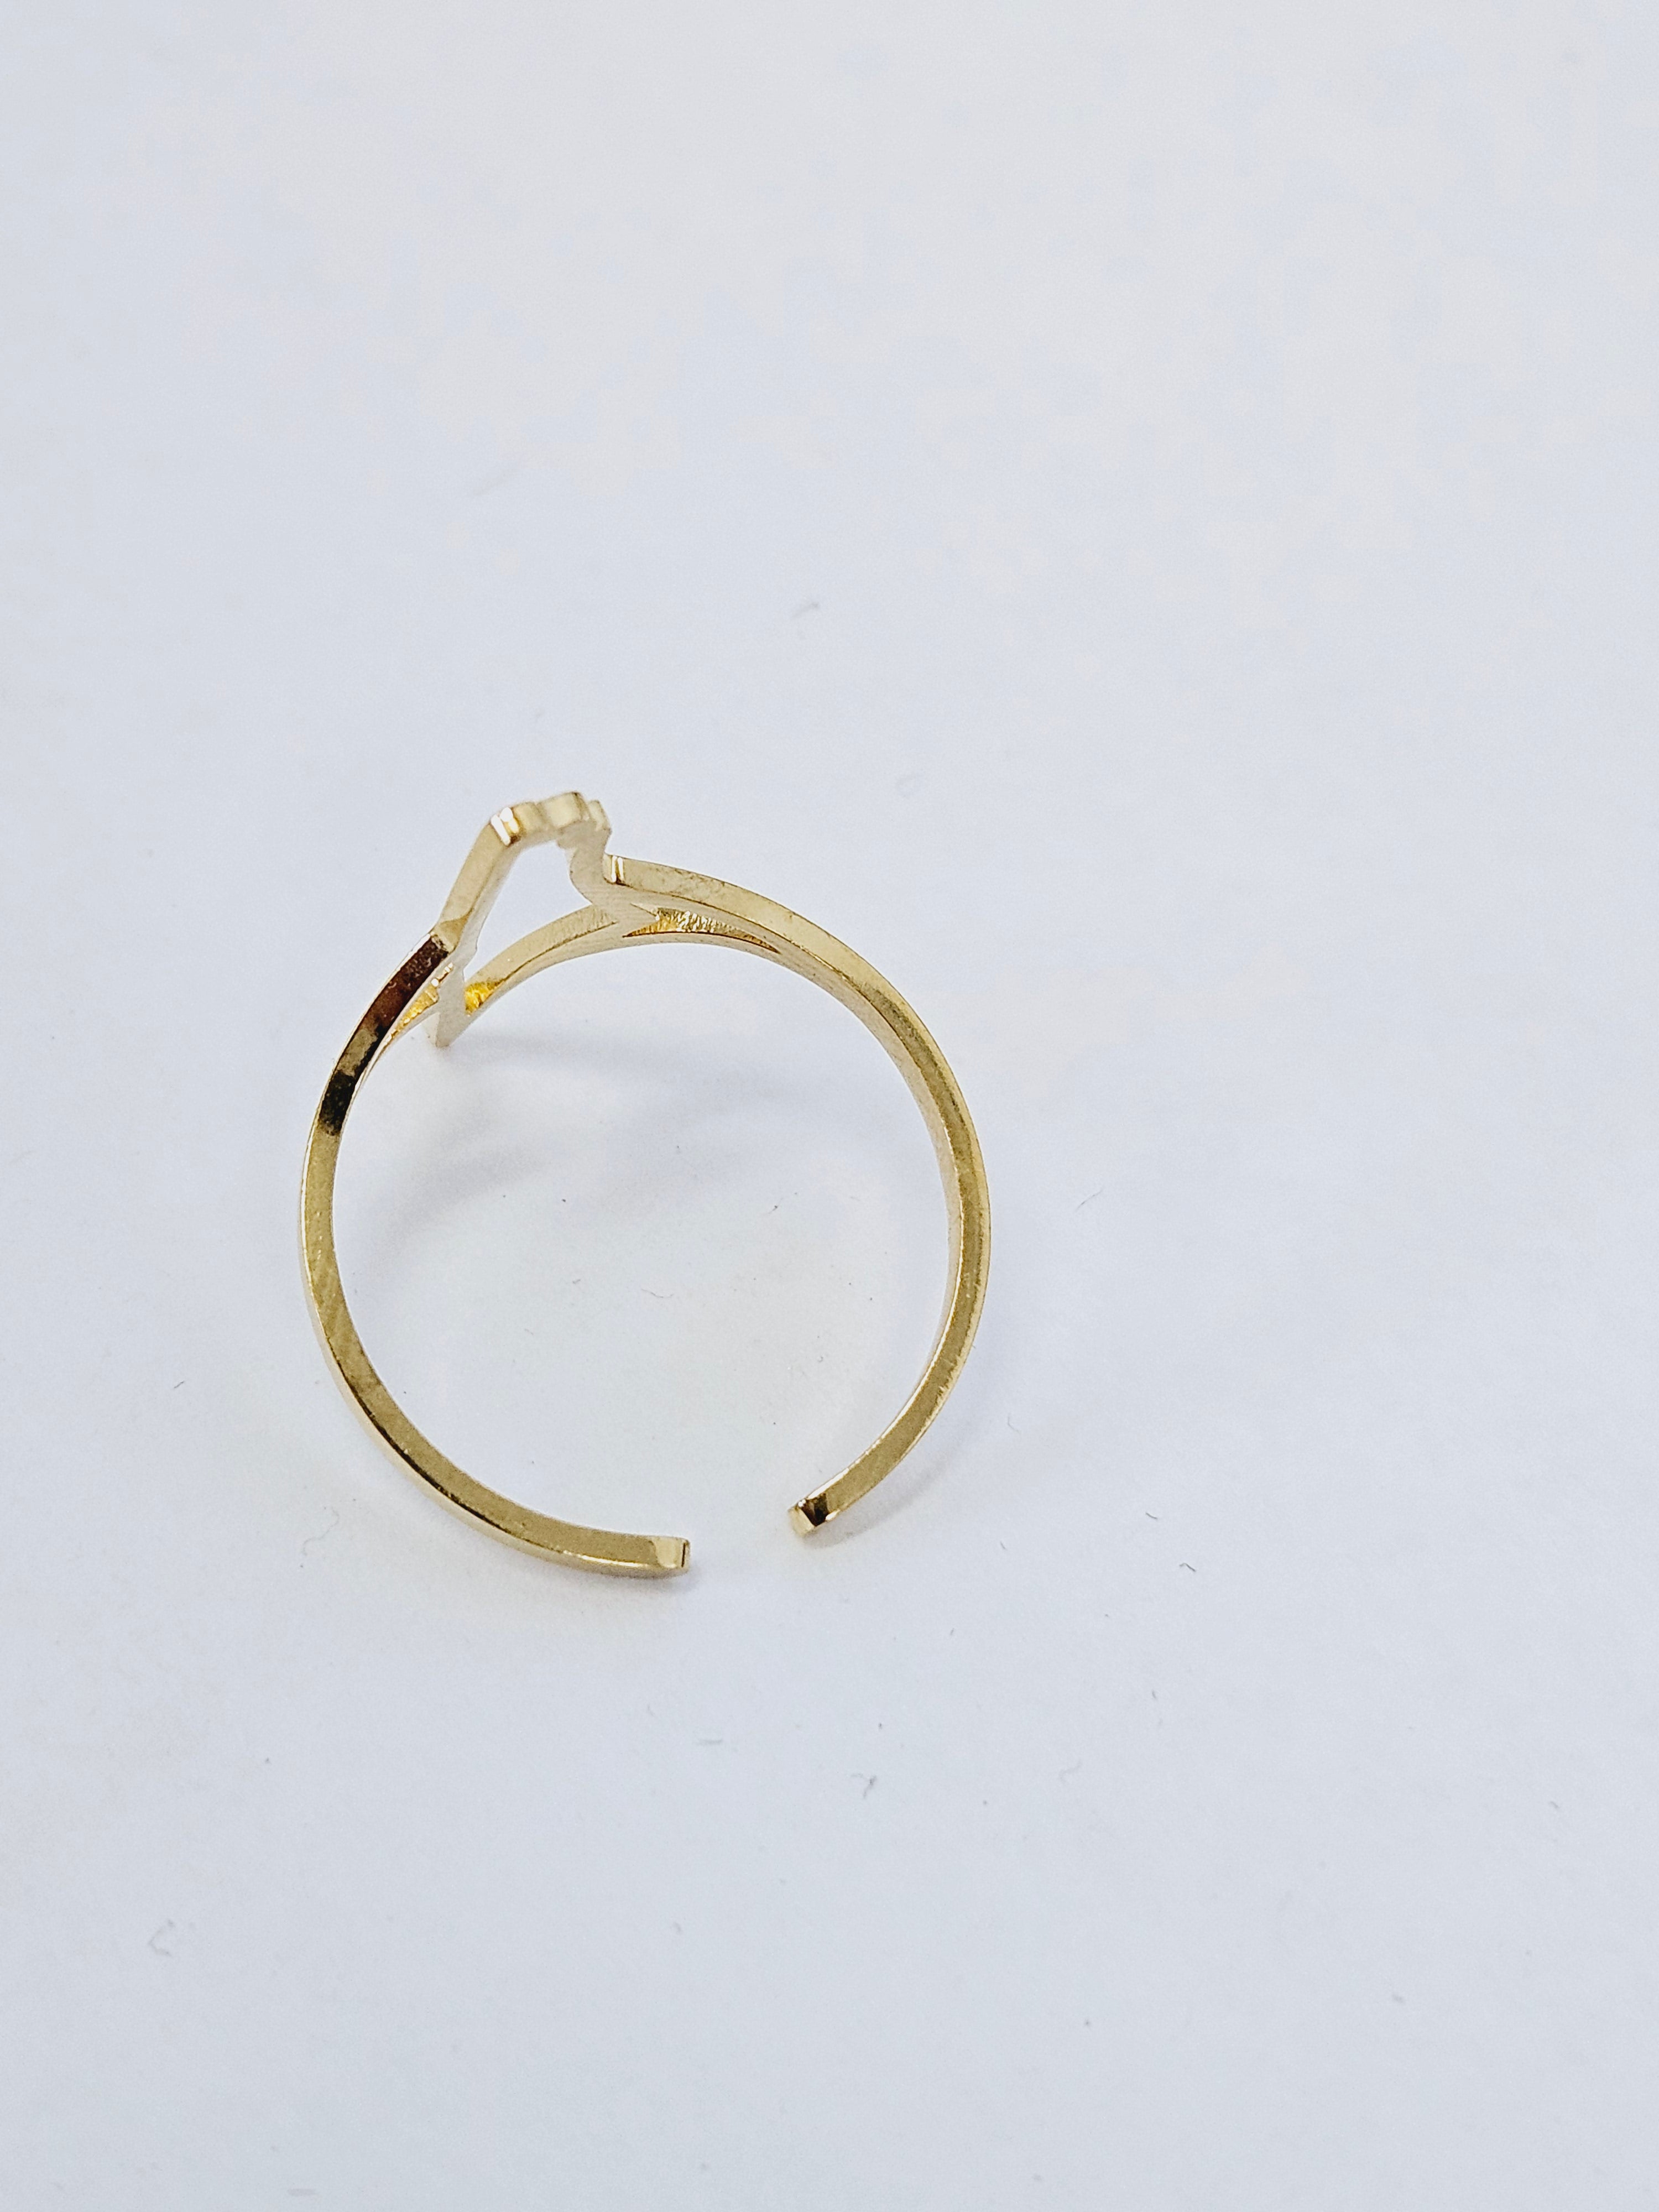 Palestine Hollow Ring Adjustable Size - Habibi Heritage